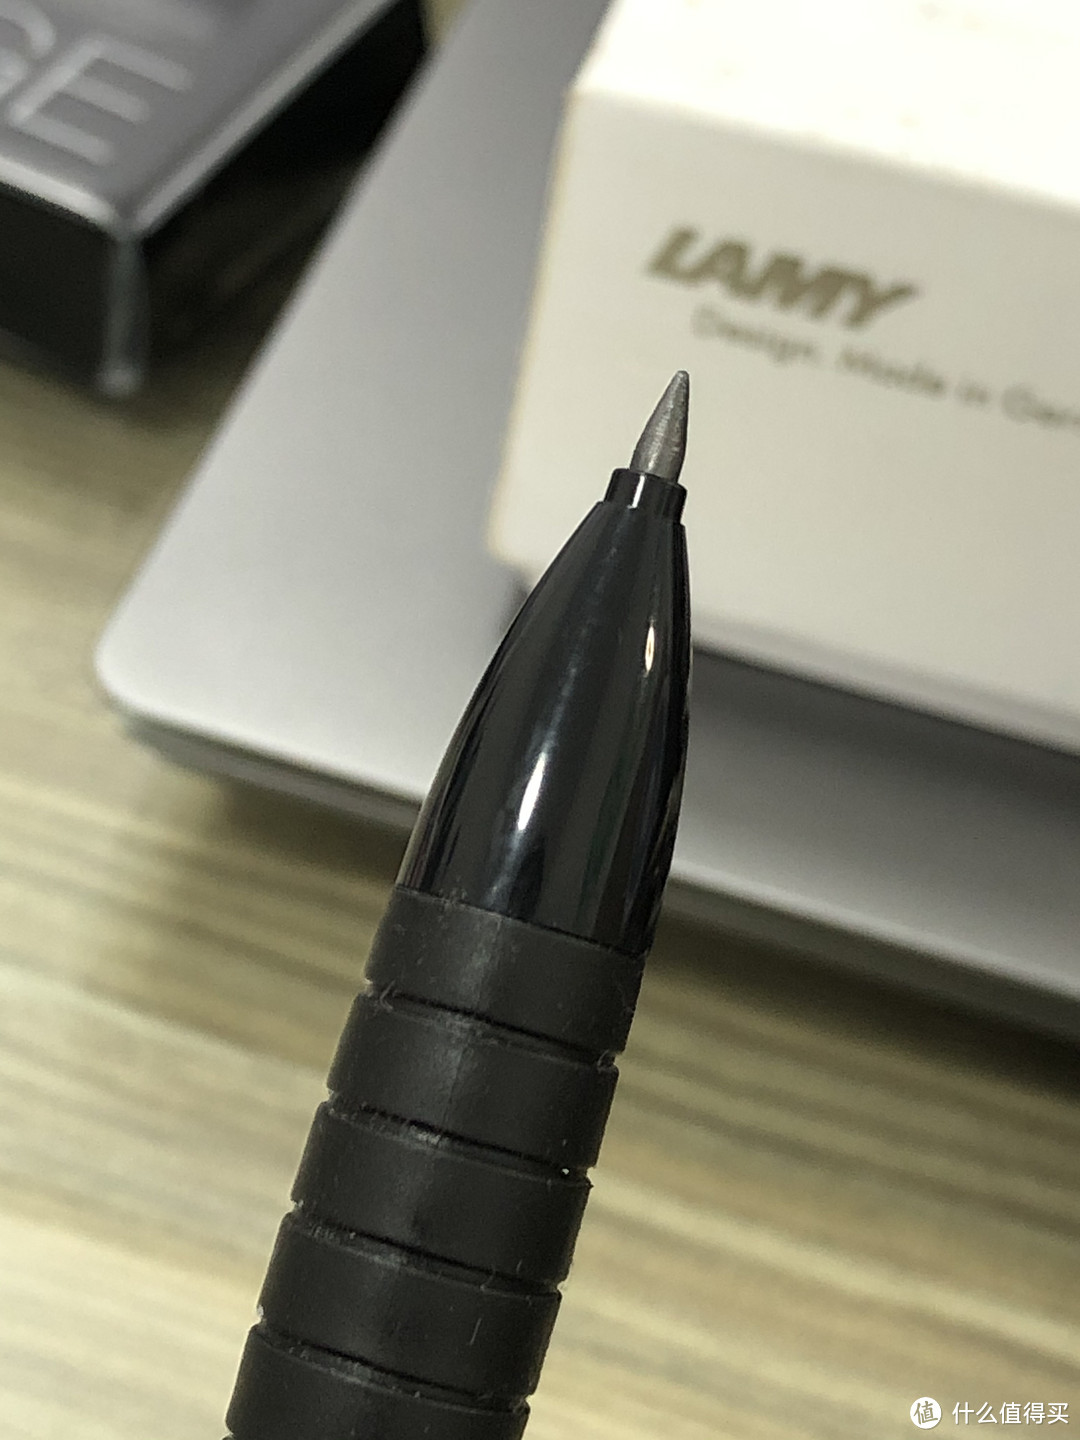 Faber-Castell的产品还有圆珠笔、钢笔，另外还有美术爱好者梦寐以求的遇水化色水溶性彩色铅笔。Faber-Castell还为这些产品生产专用的橡皮擦等。2000年，保时捷找到Faber-Castell，共同生产保时捷精品TEC-FLEX笔，笔杆采用编织方法，可伸缩，成为时尚男士的新宠。